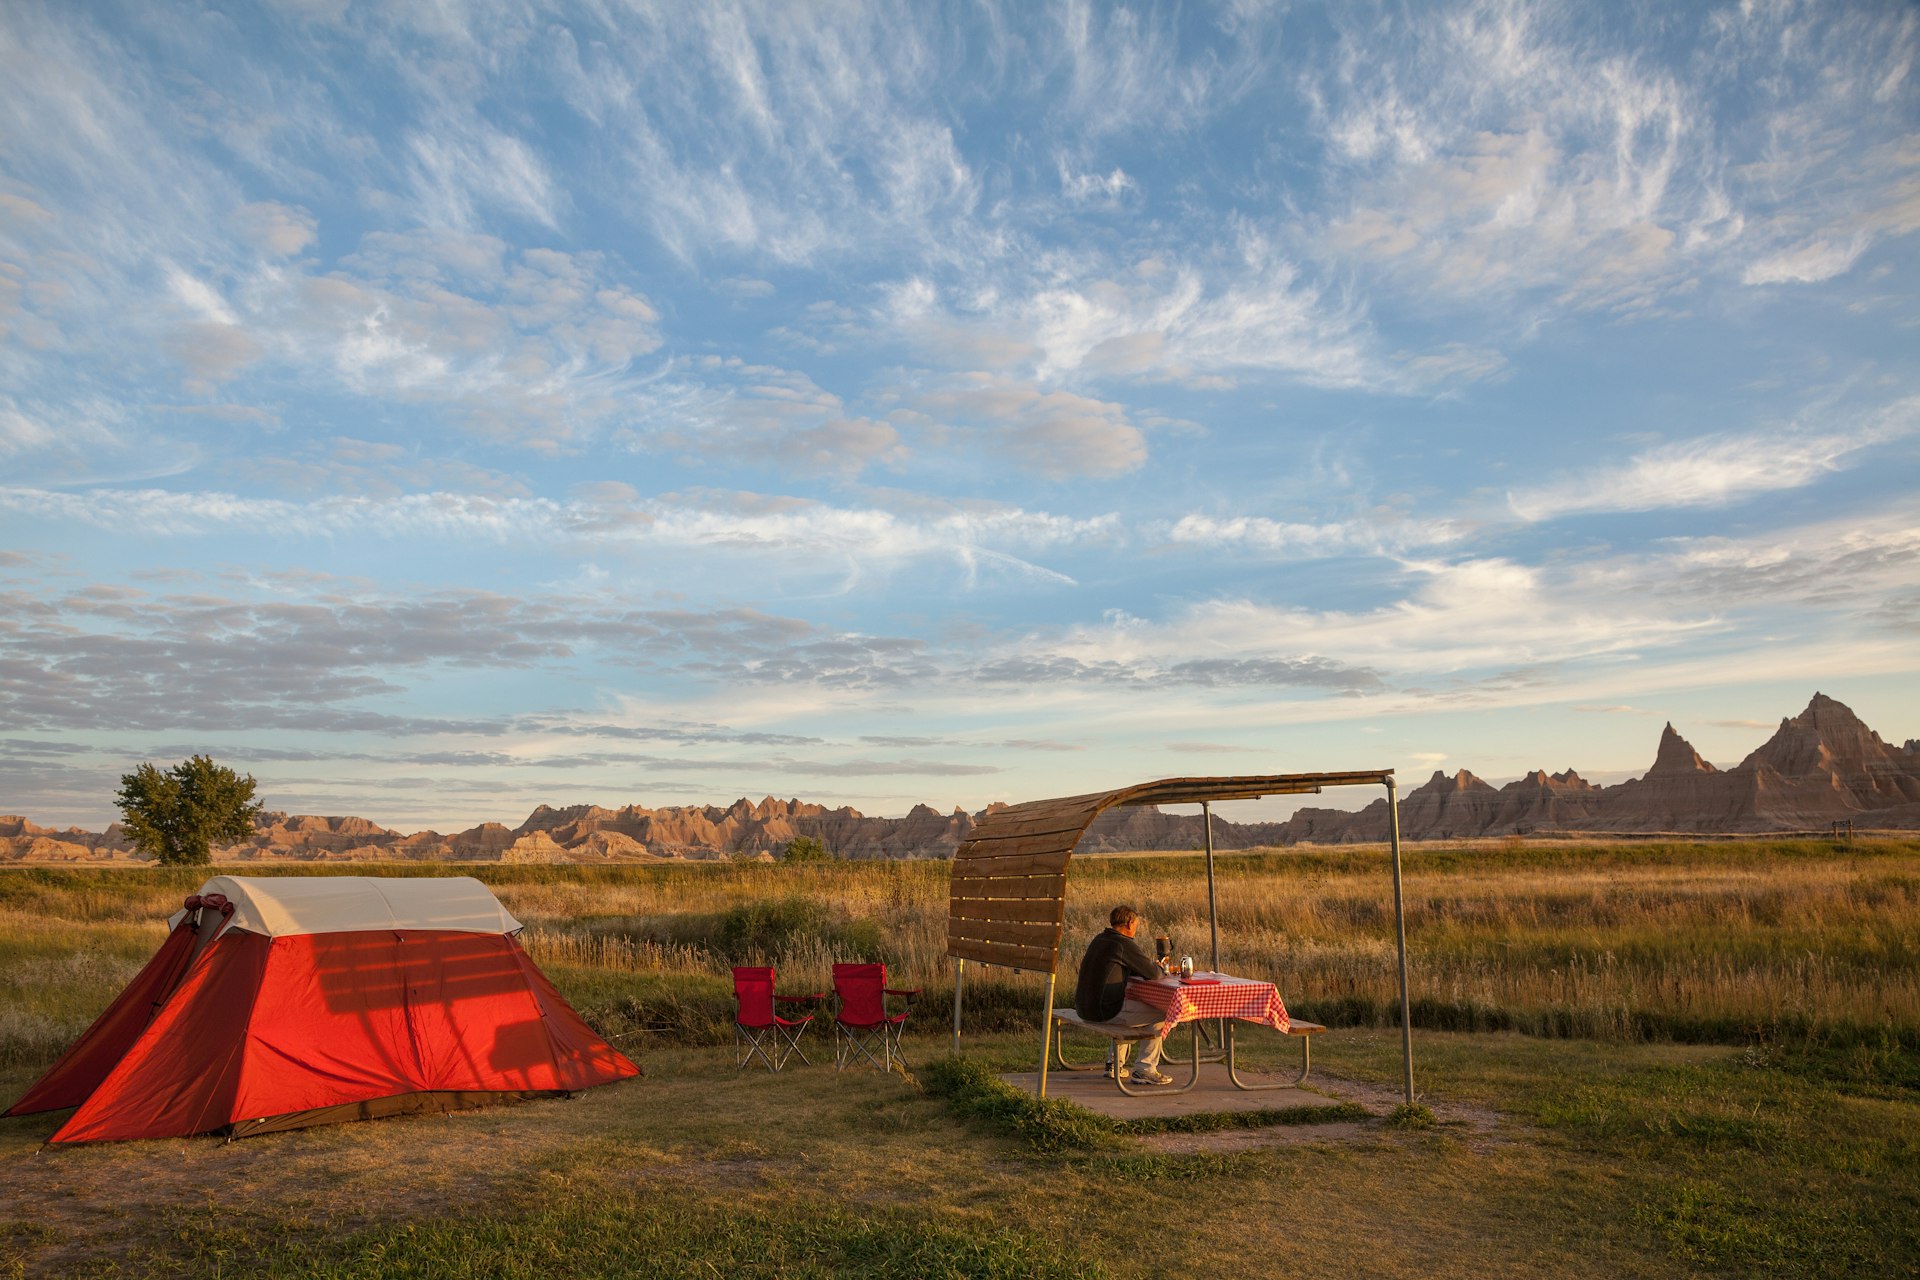 A designated picnic and campsite area in Badlands National Park, South Dakota